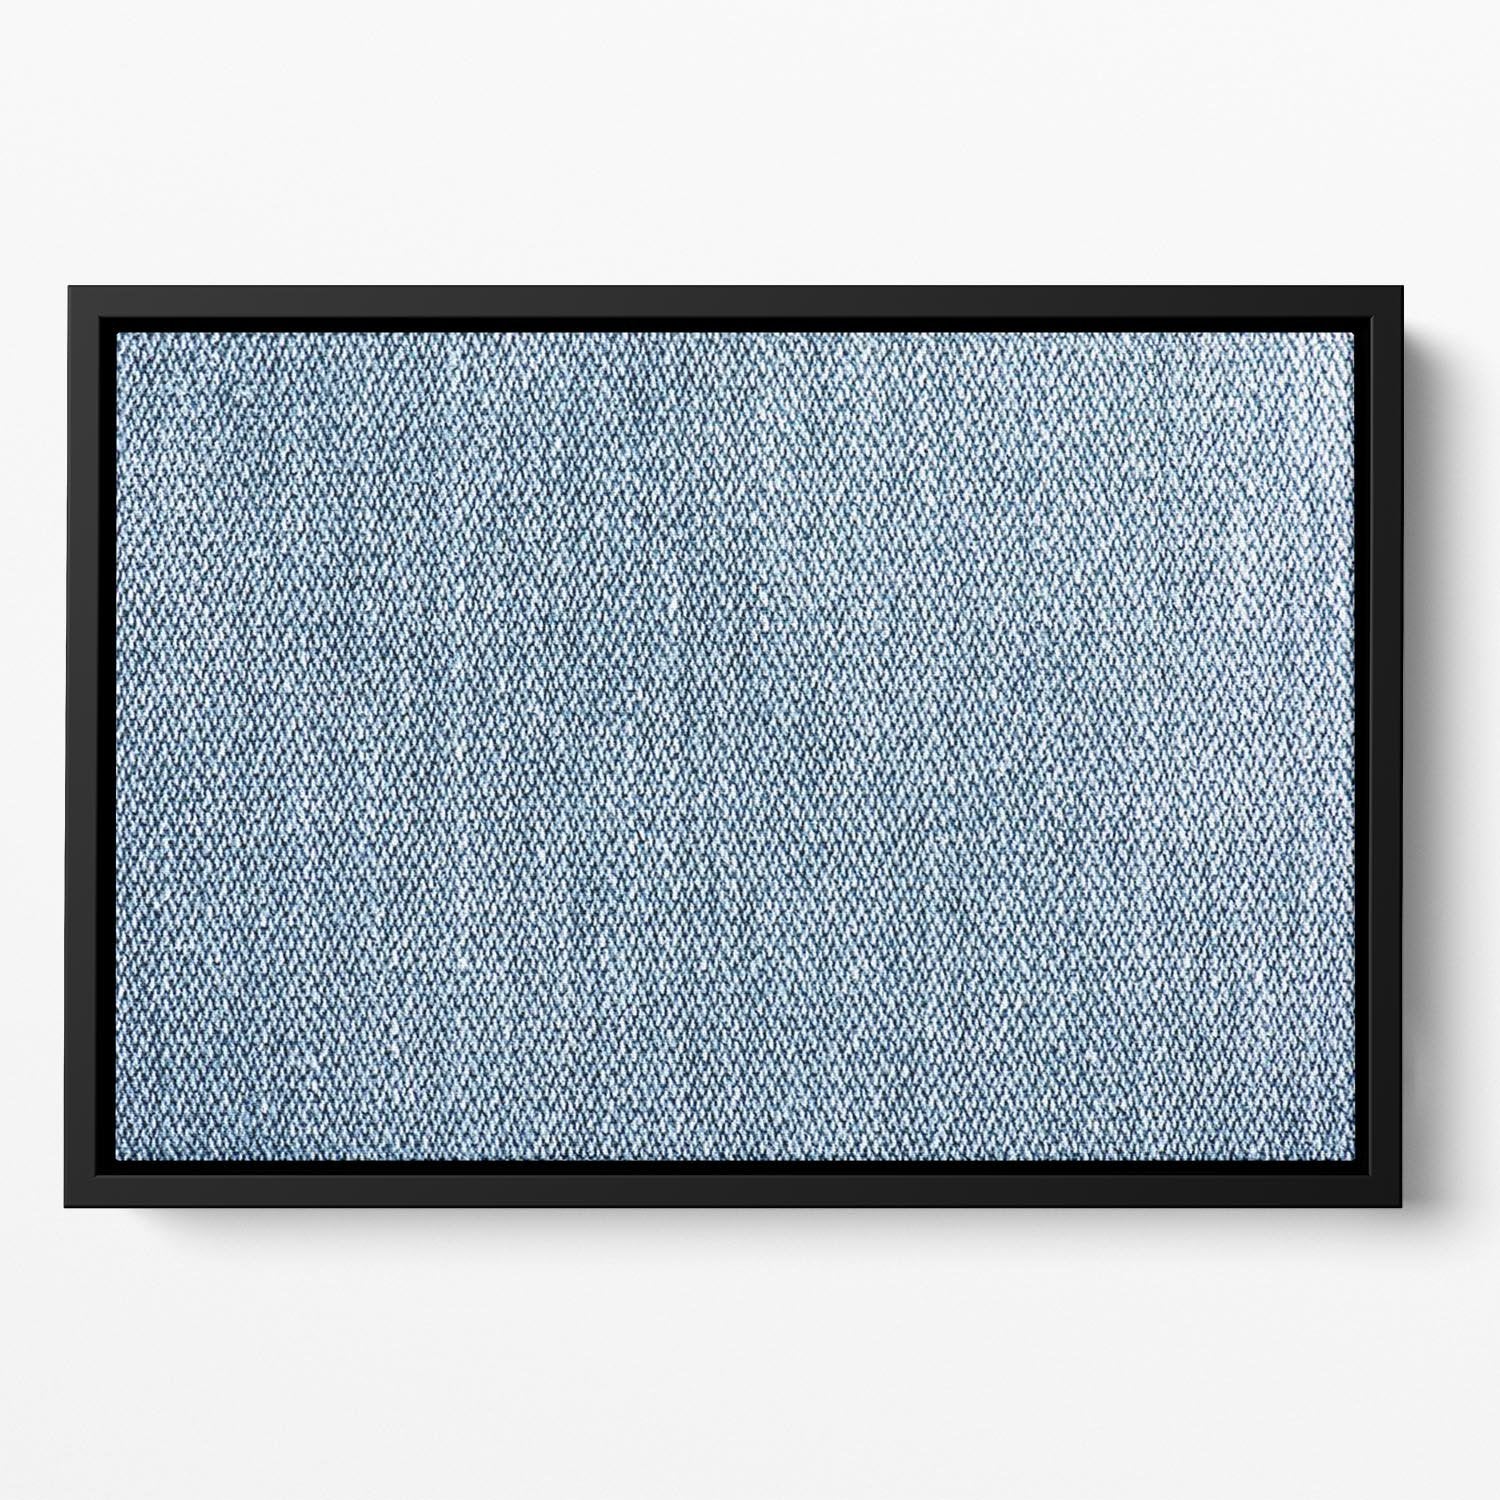 Blue denim texture Floating Framed Canvas - Canvas Art Rocks - 2